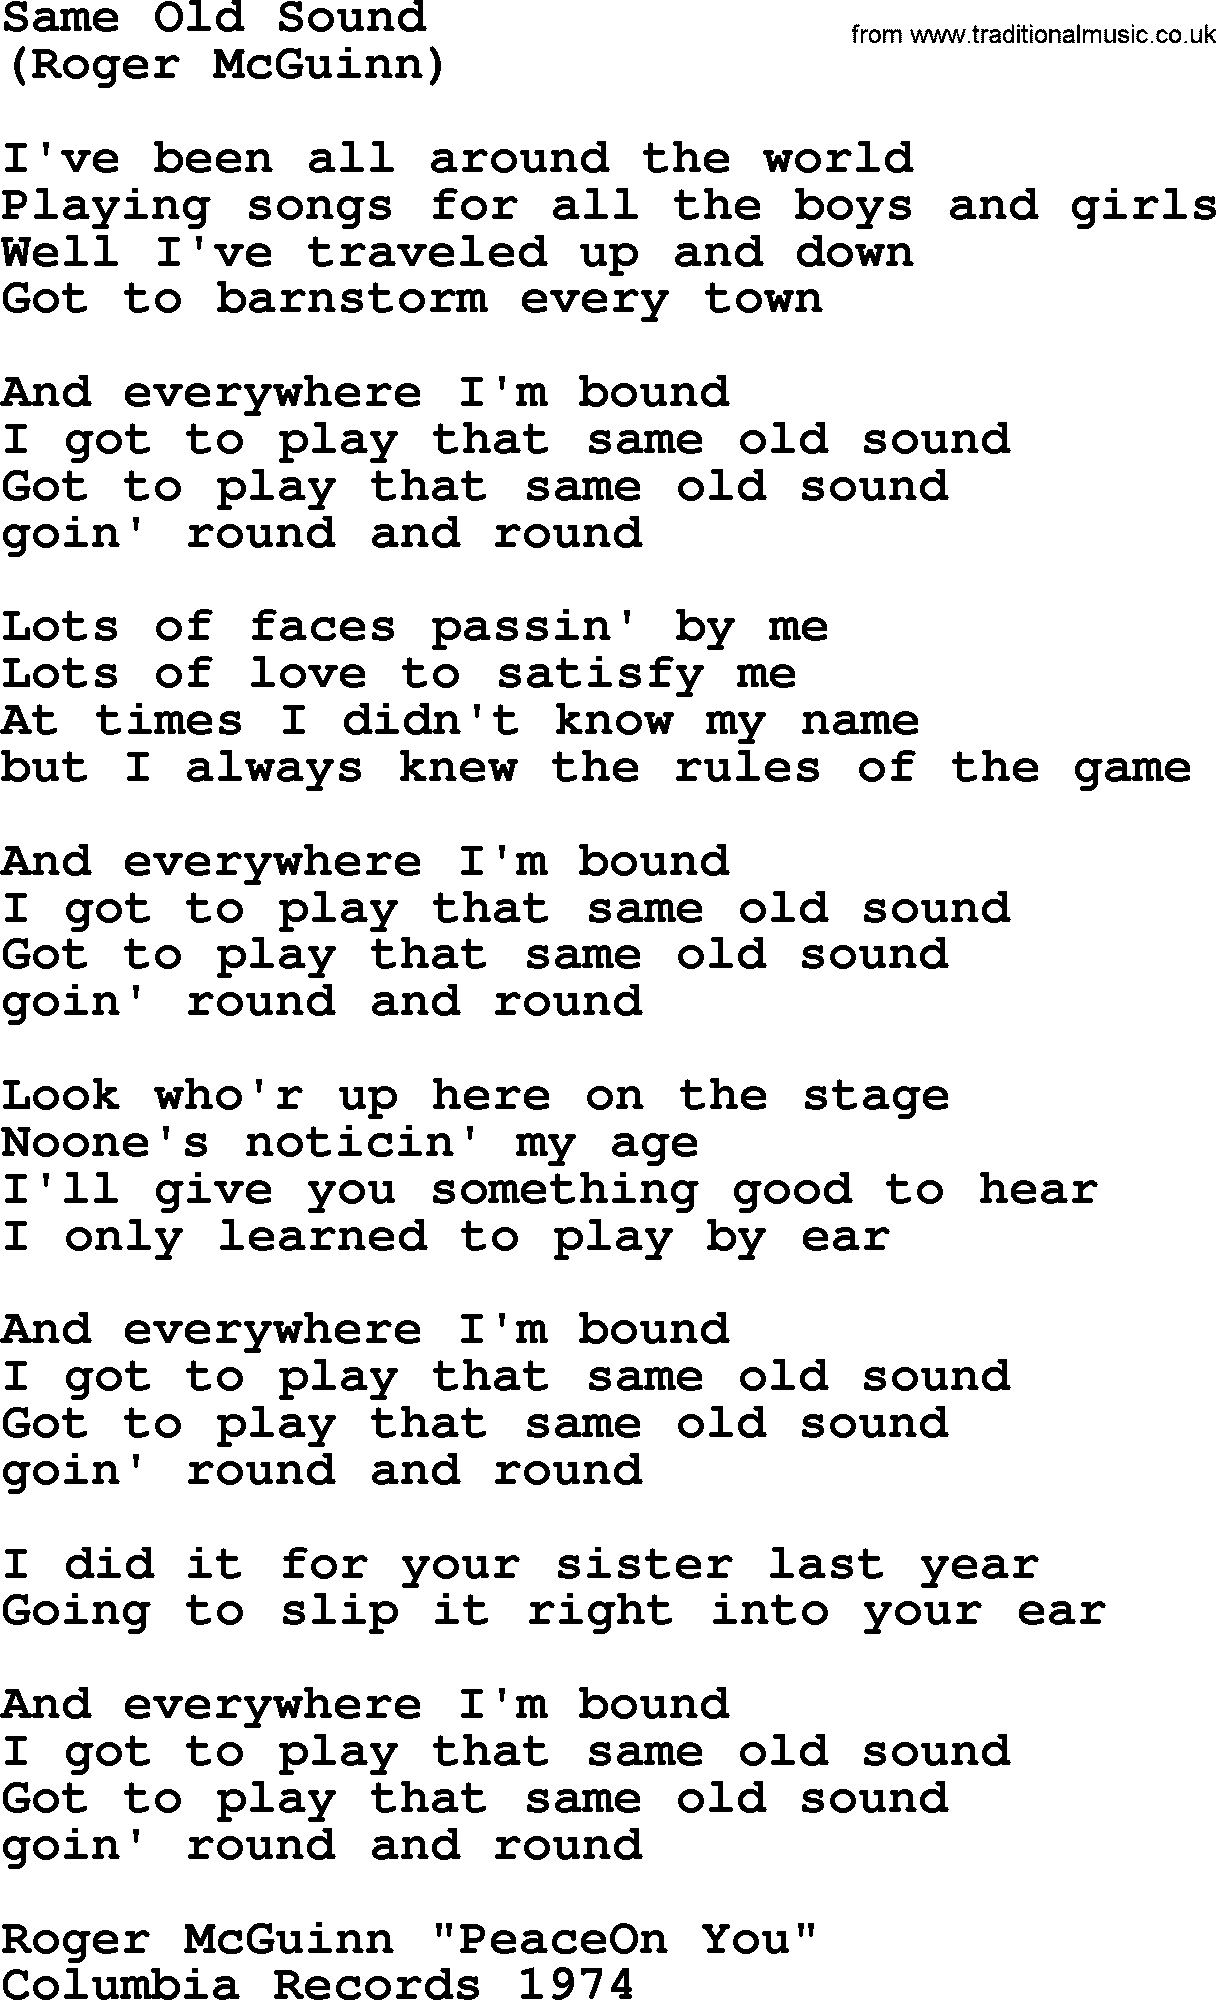 The Byrds song Same Old Sound, lyrics